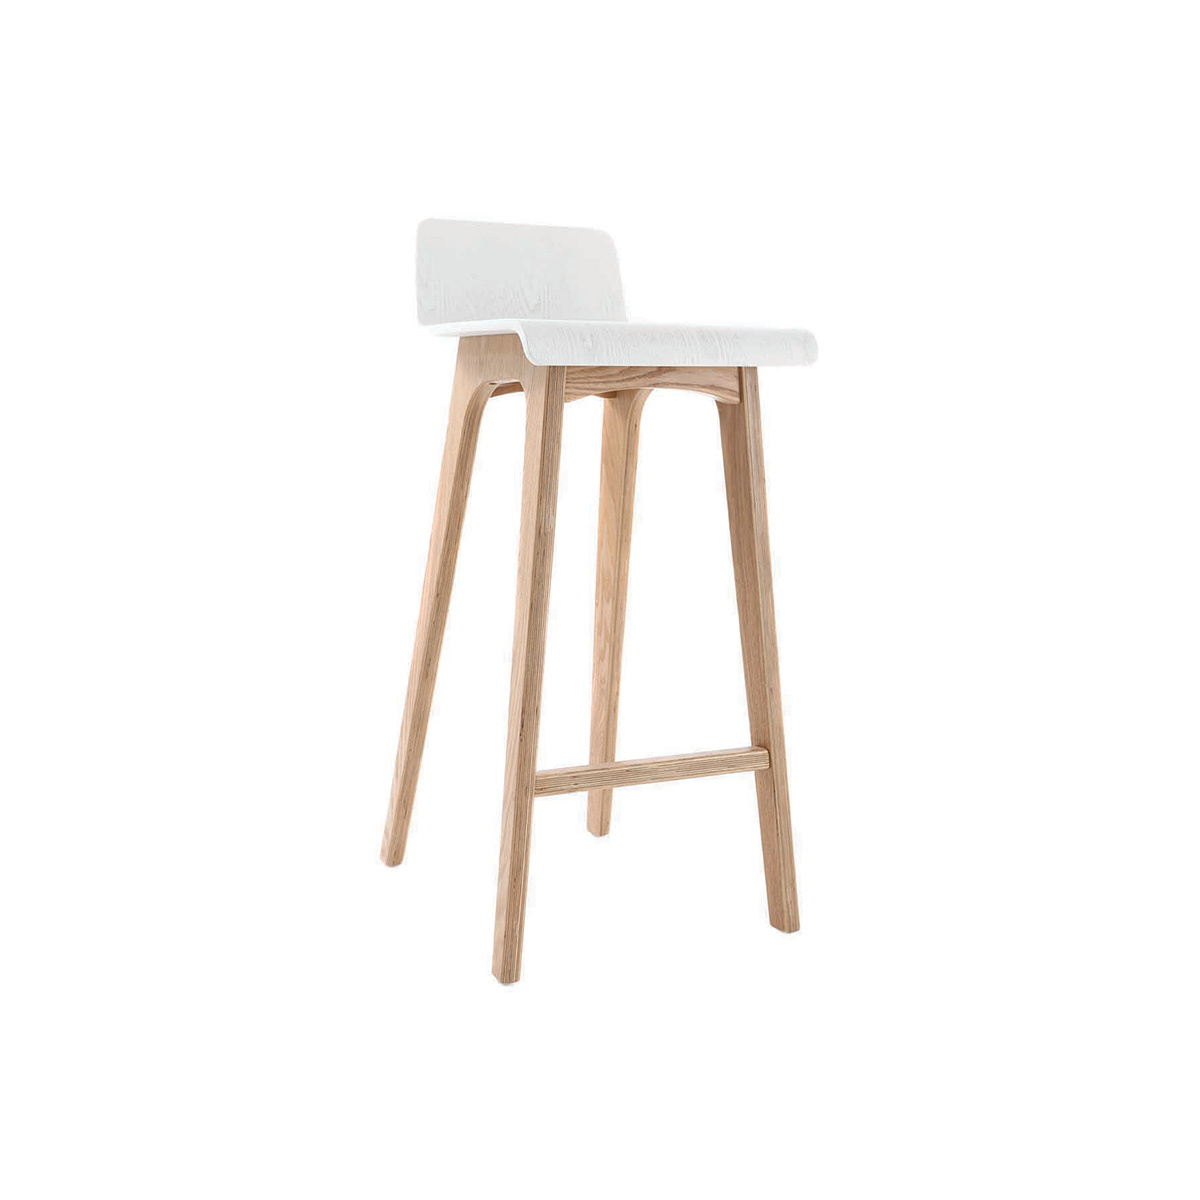 Sgabello / sedia da bar design legno naturale e bianco scandinavo 75 cm BALTIK